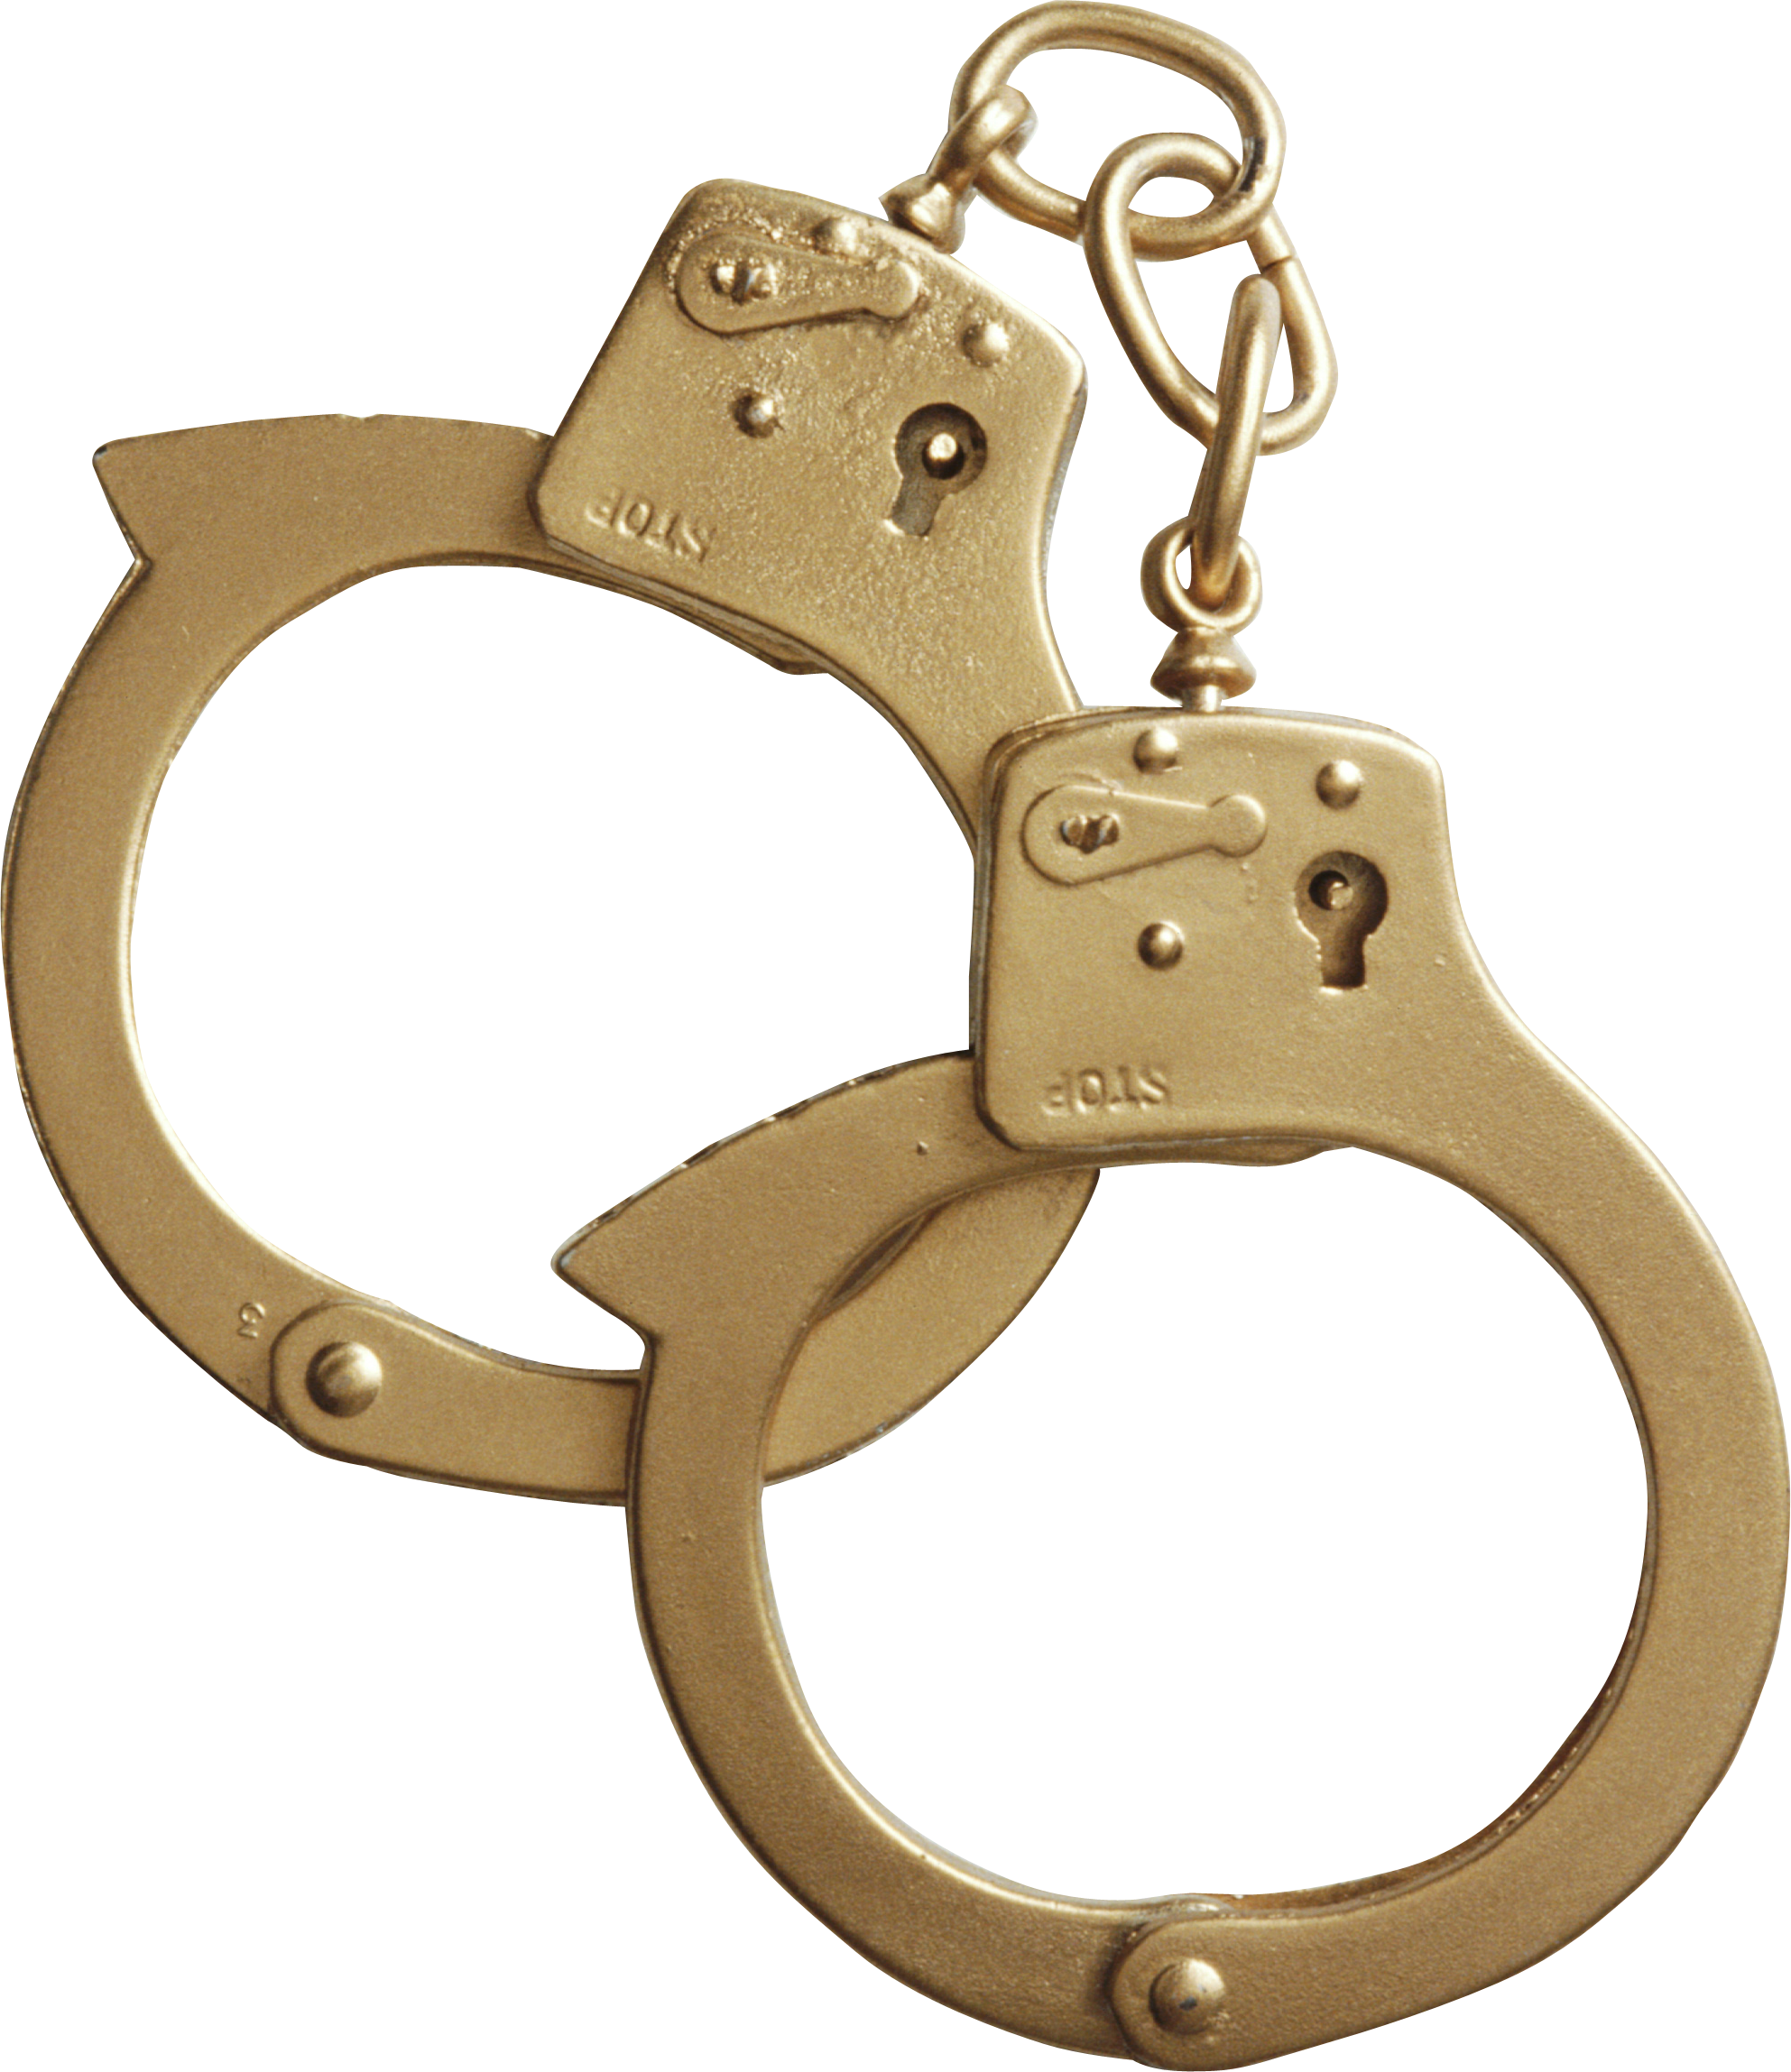 Handcuff clipart custody. Handcuffs png 